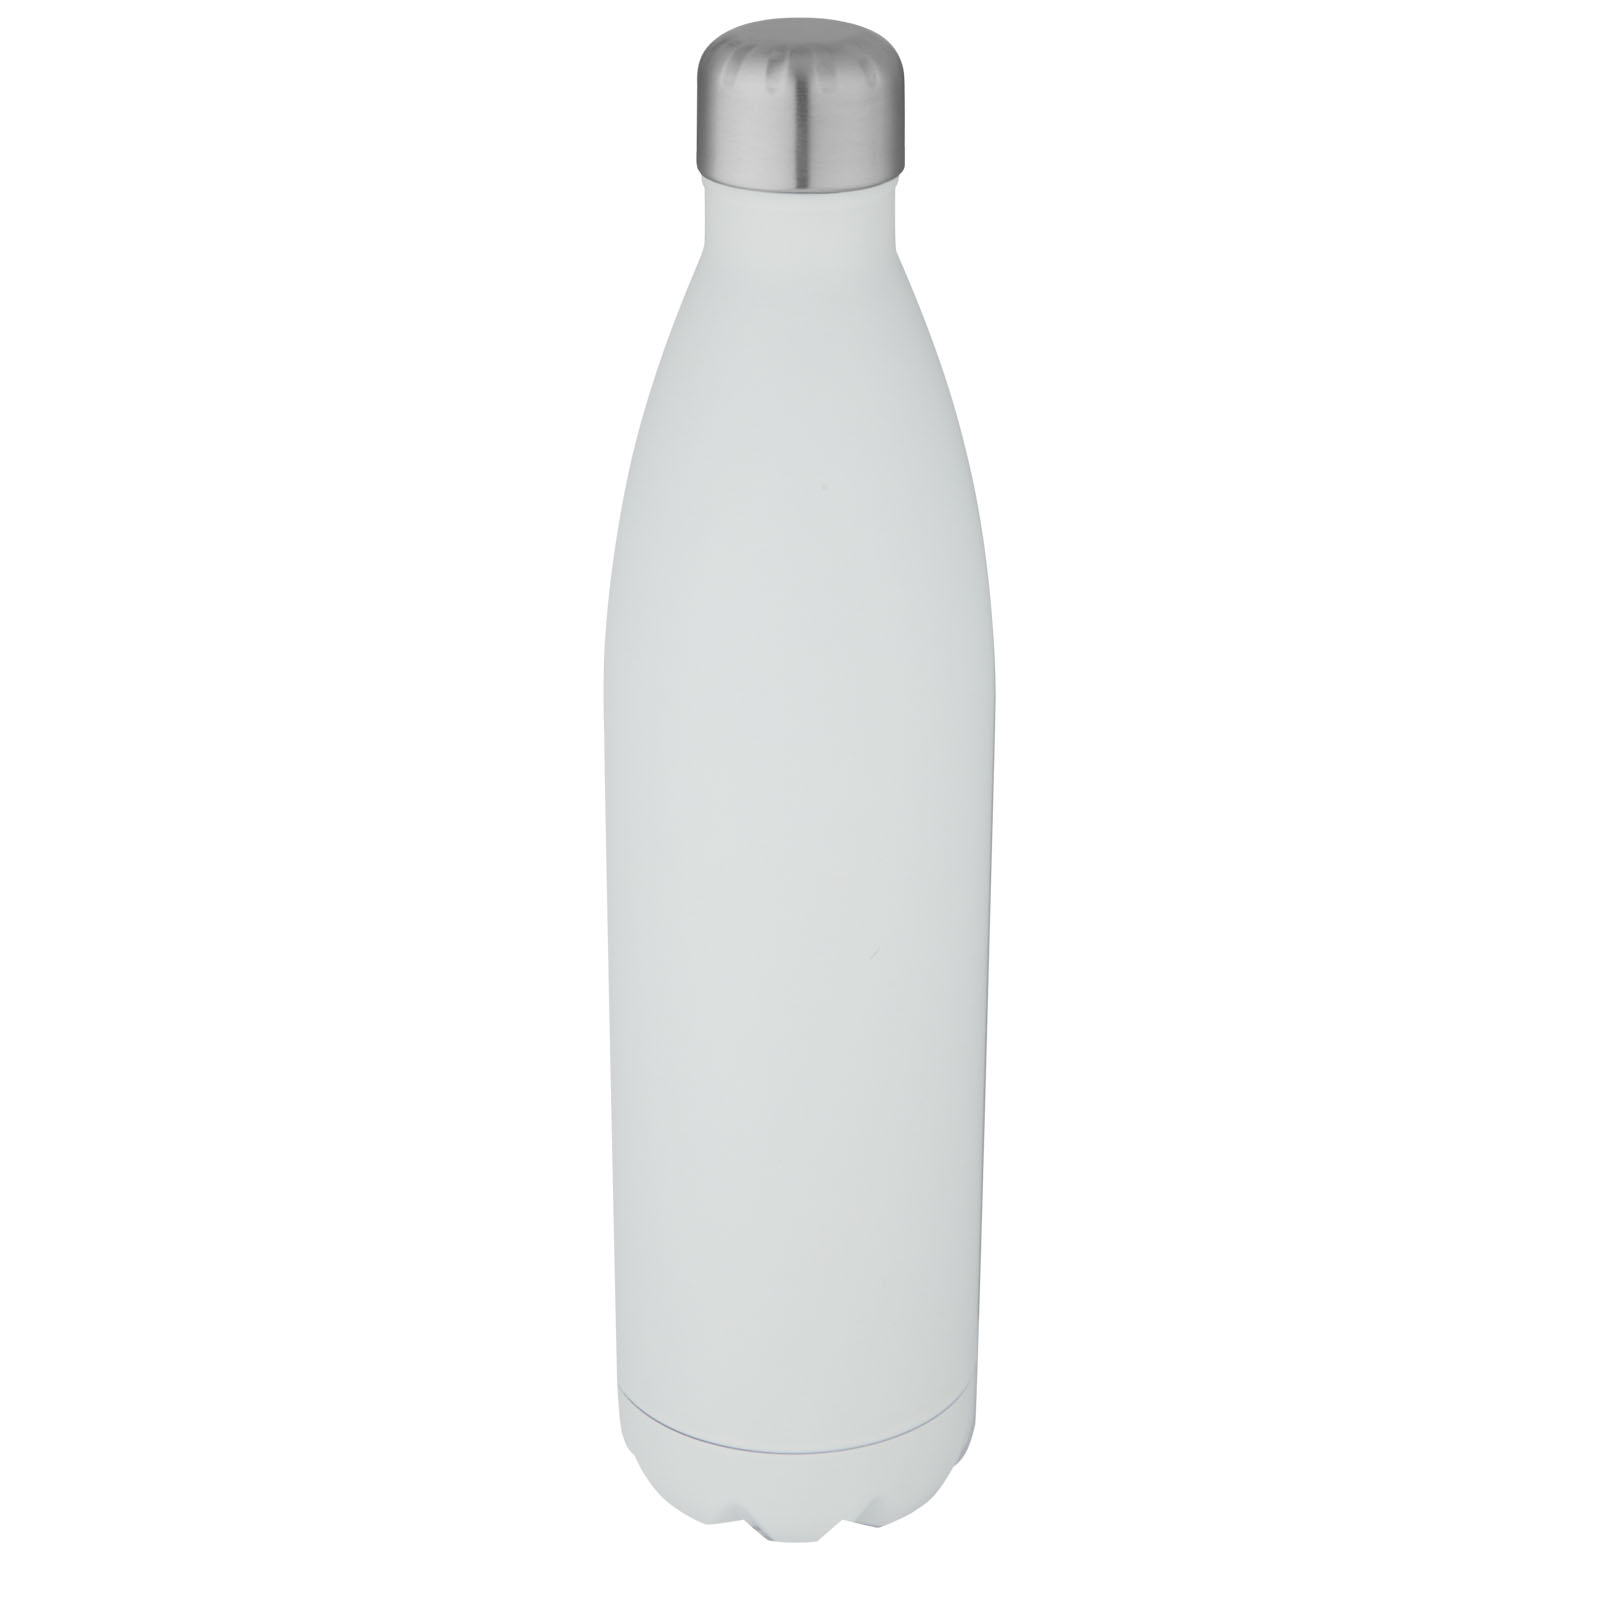 Aluminium Trinkflasche 770ml - NonvisioN Werbeproduktion GmbH&Co. KG